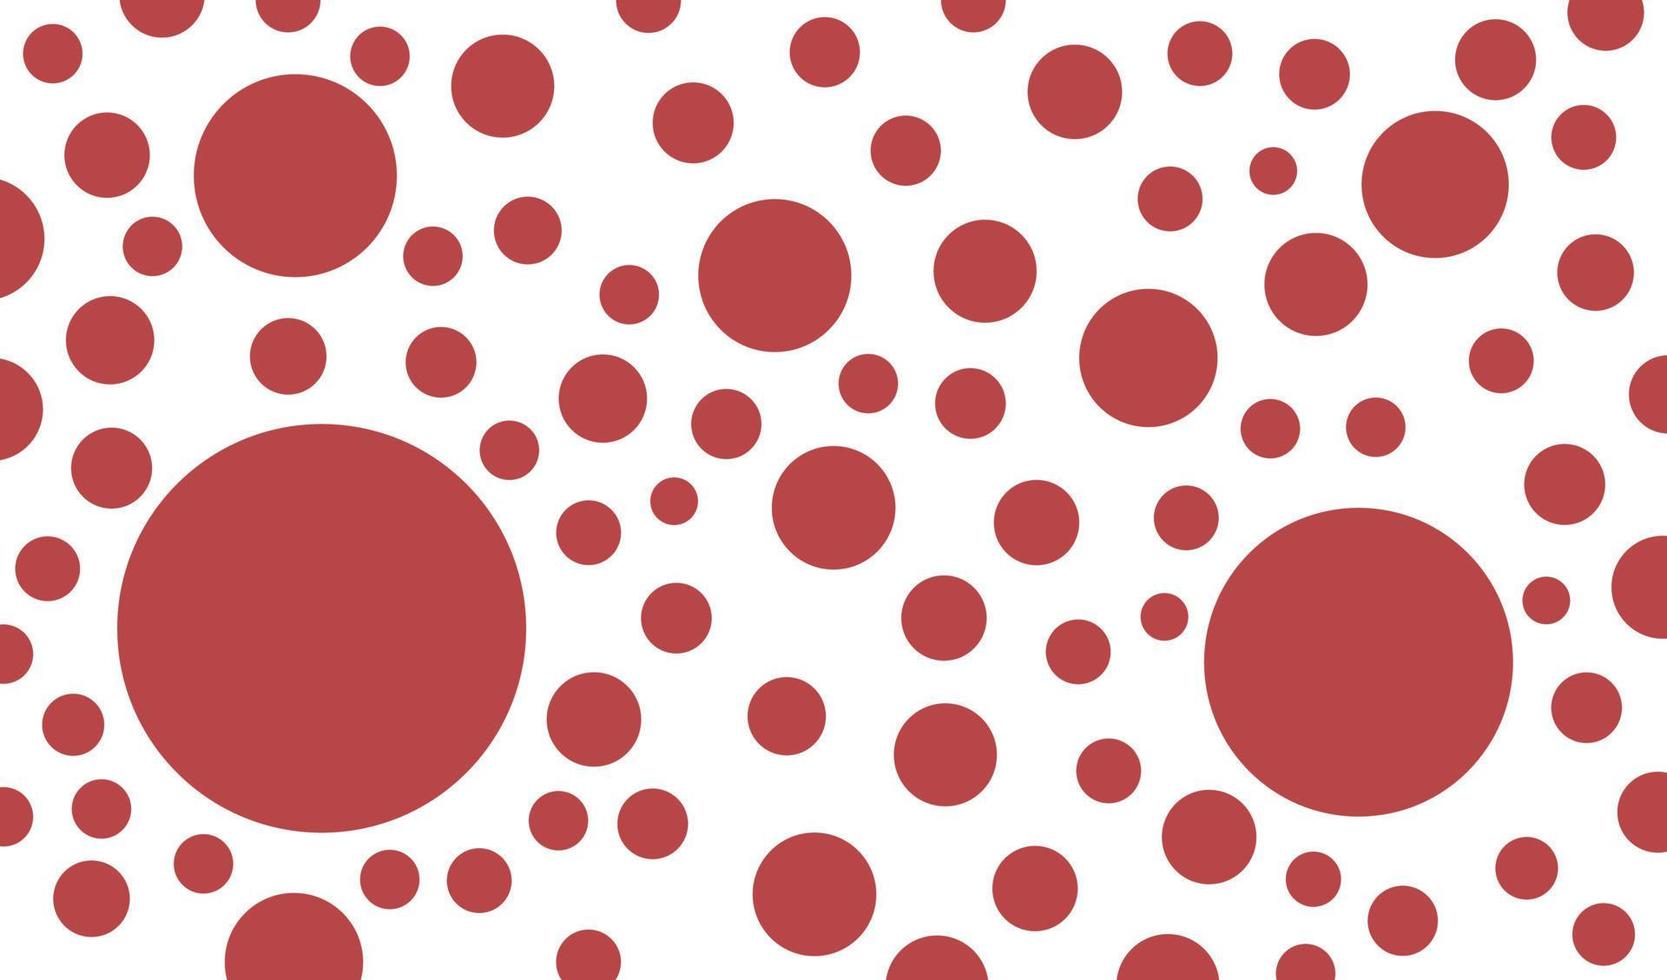 abstracto rojo polkadots arte patrón fondo blanco vector